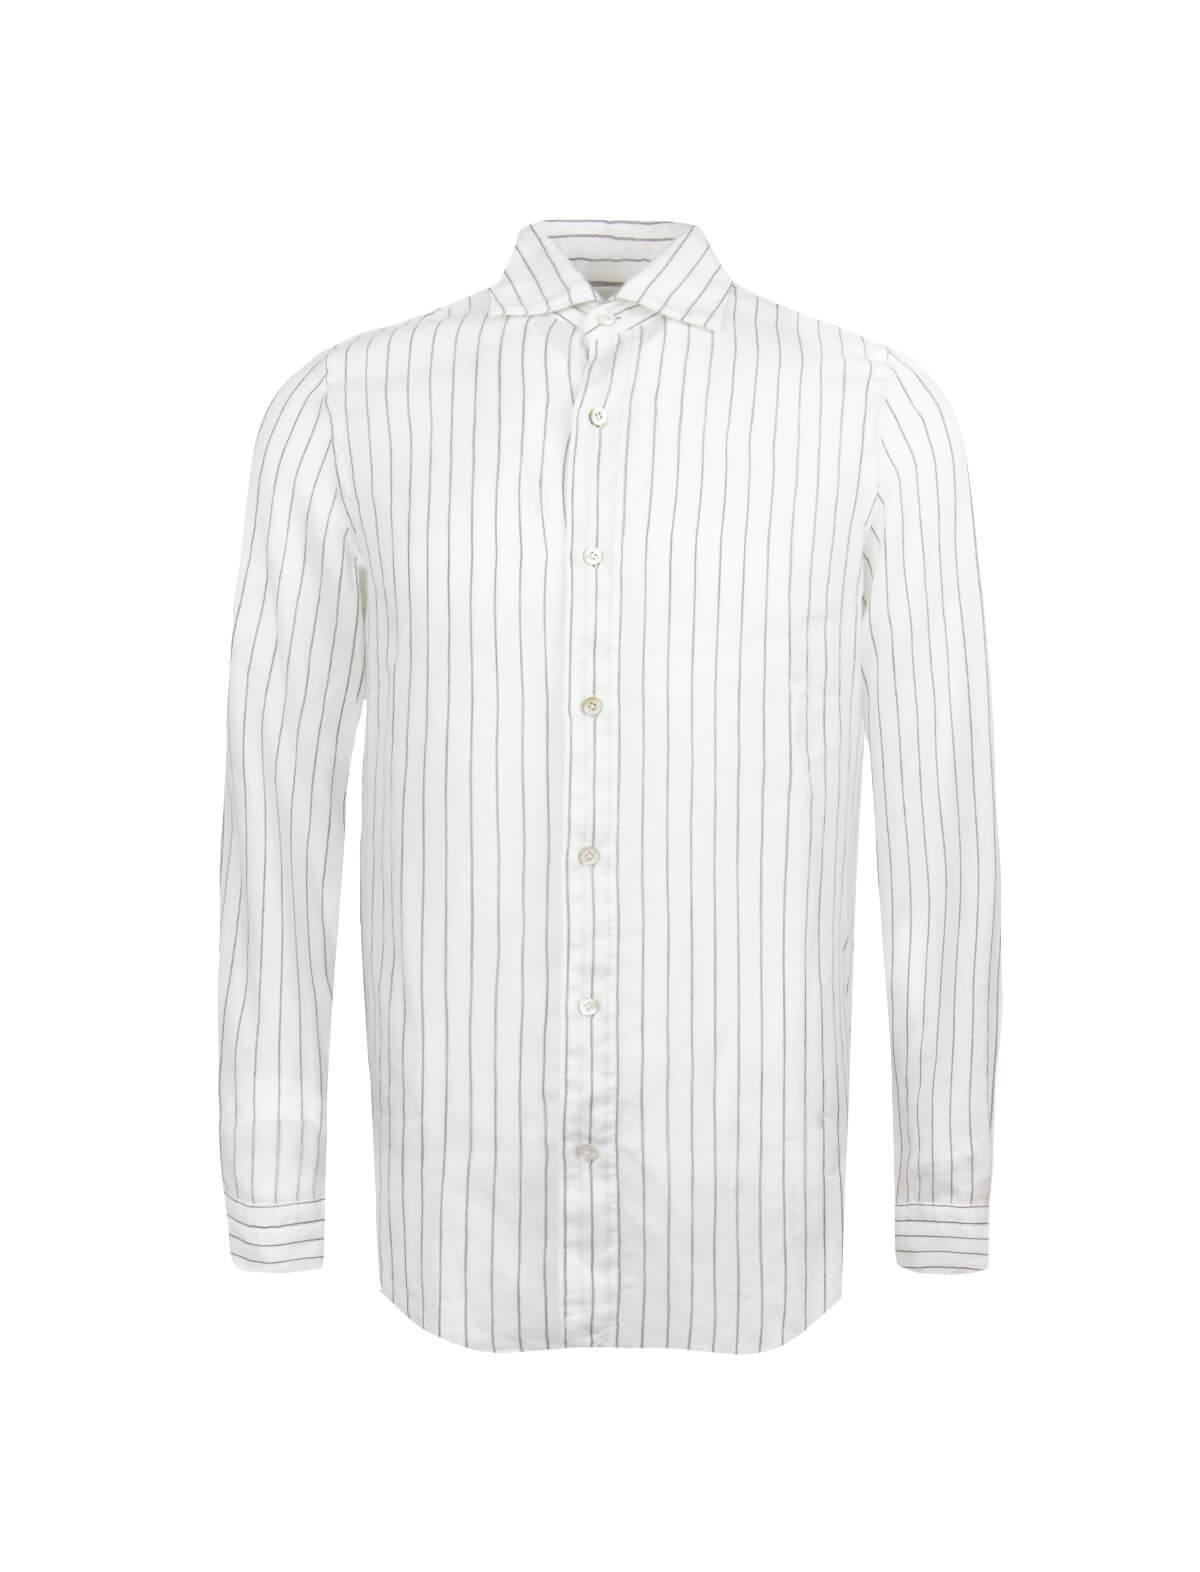 FINAMORE 1925 Tokyo Textile-Wool Blend Shirt in White Pinstripes | CLOSET Singapore